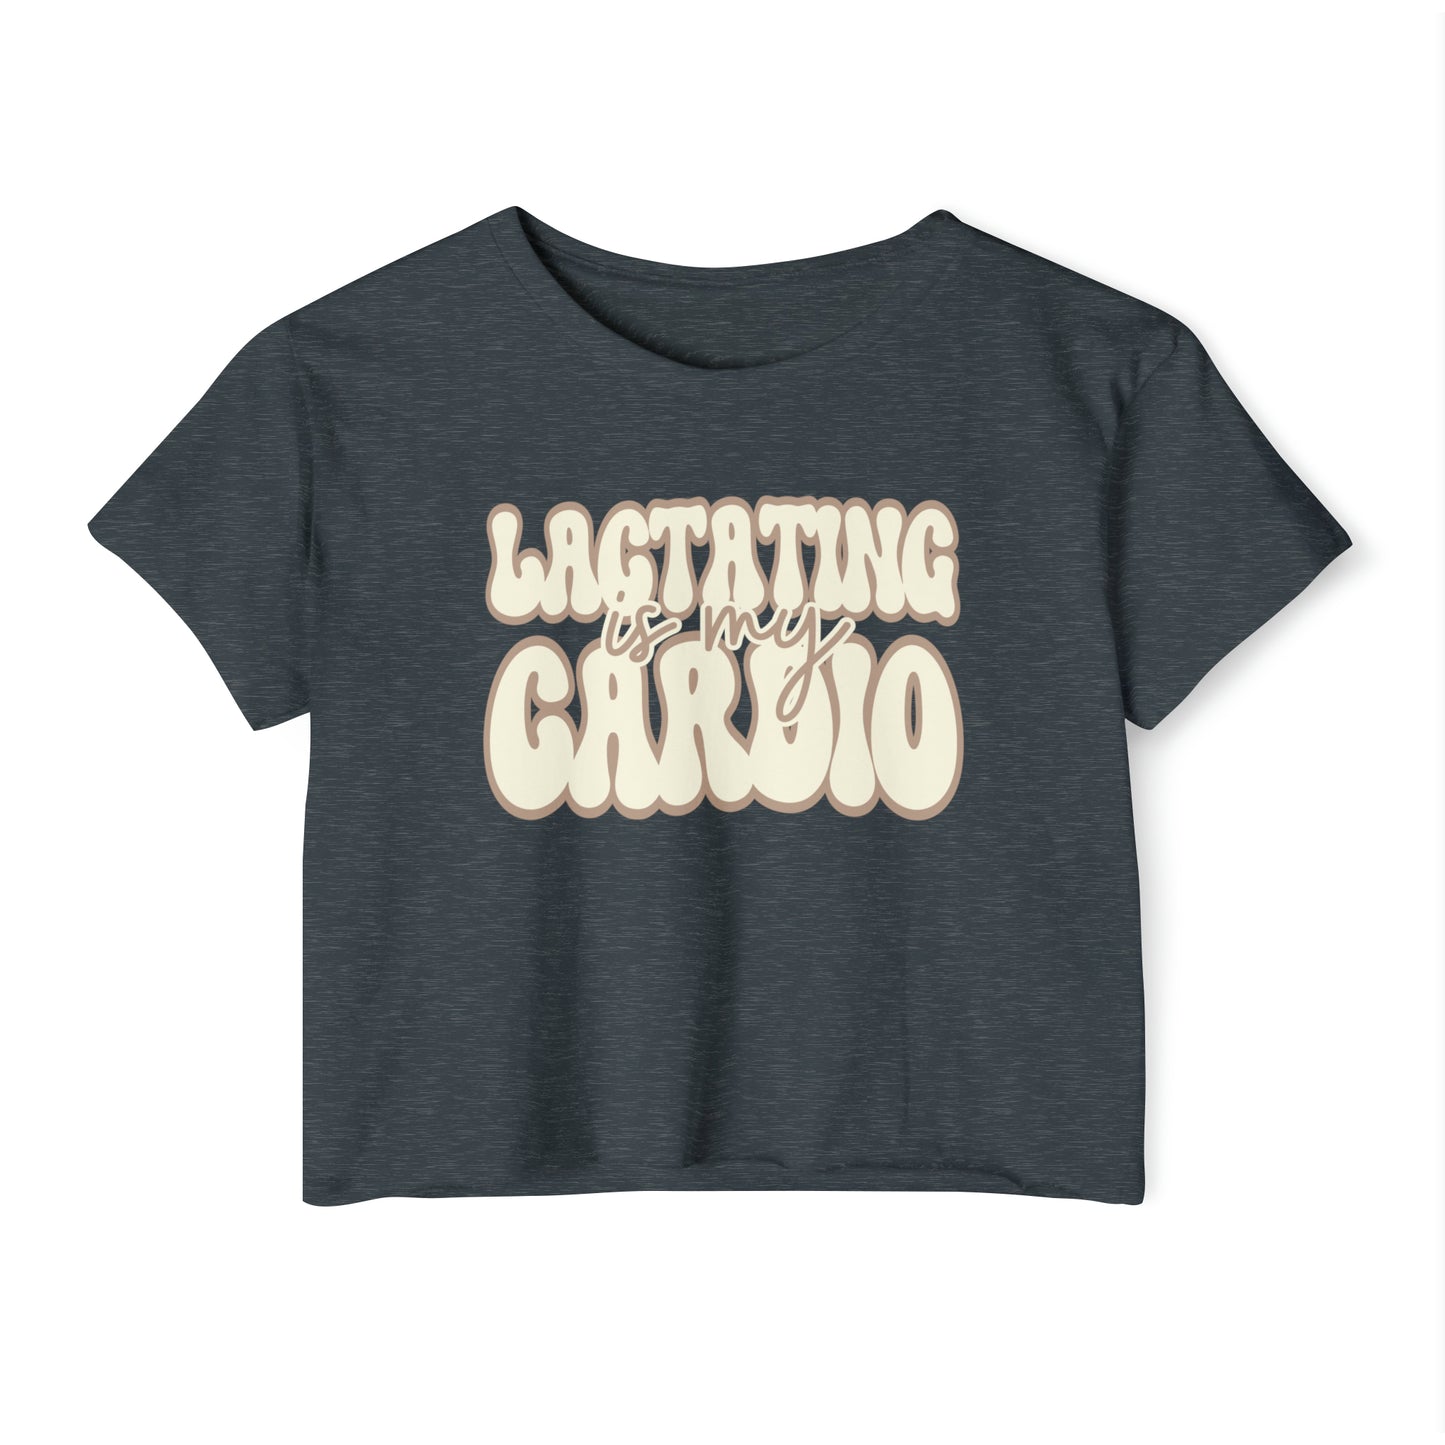 "Lactating is My Cardio" Breastfeeding Cropped Tee